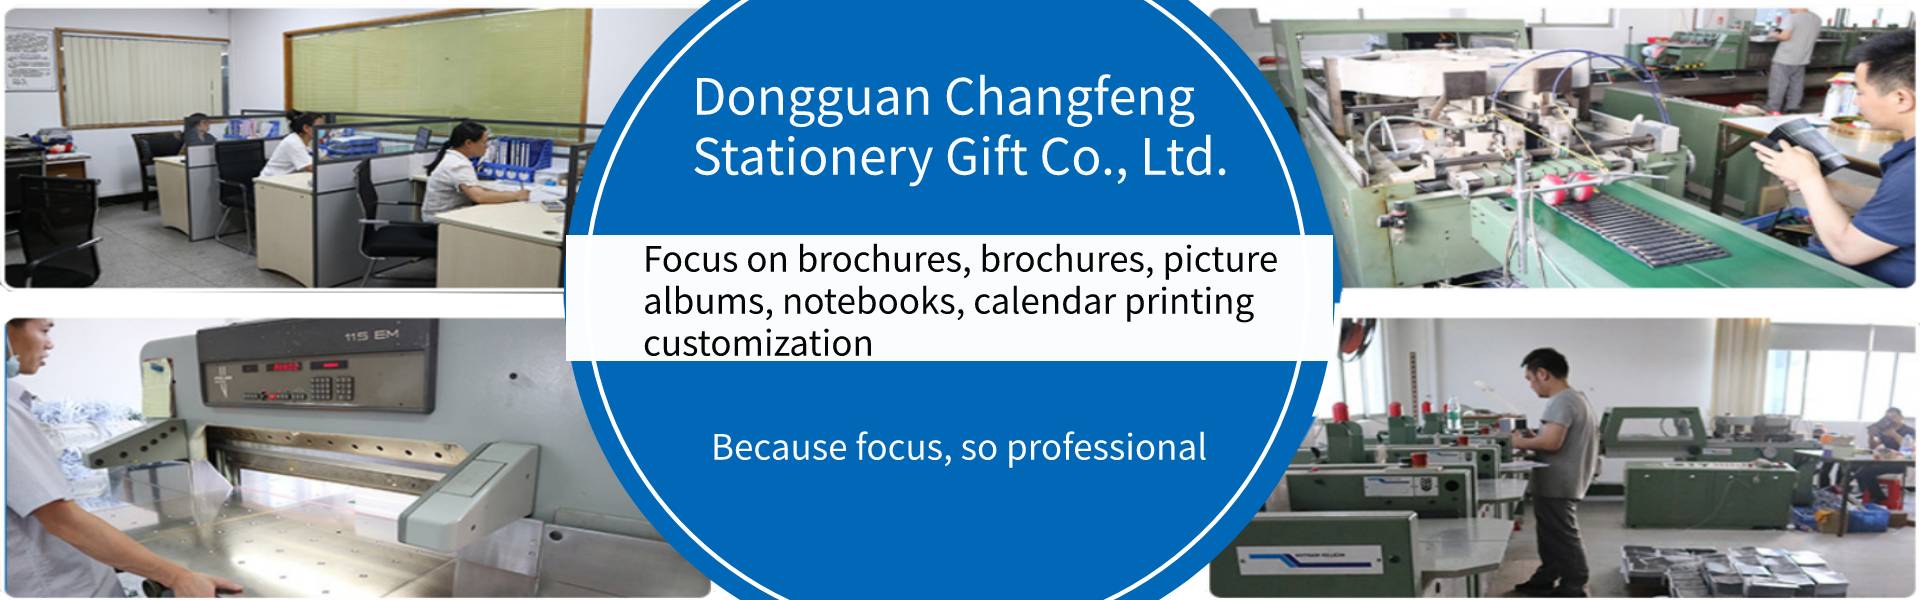 használati útmutató, képalbum, notebook,Dongguan Changfeng Stationery Gift Co., Ltd.